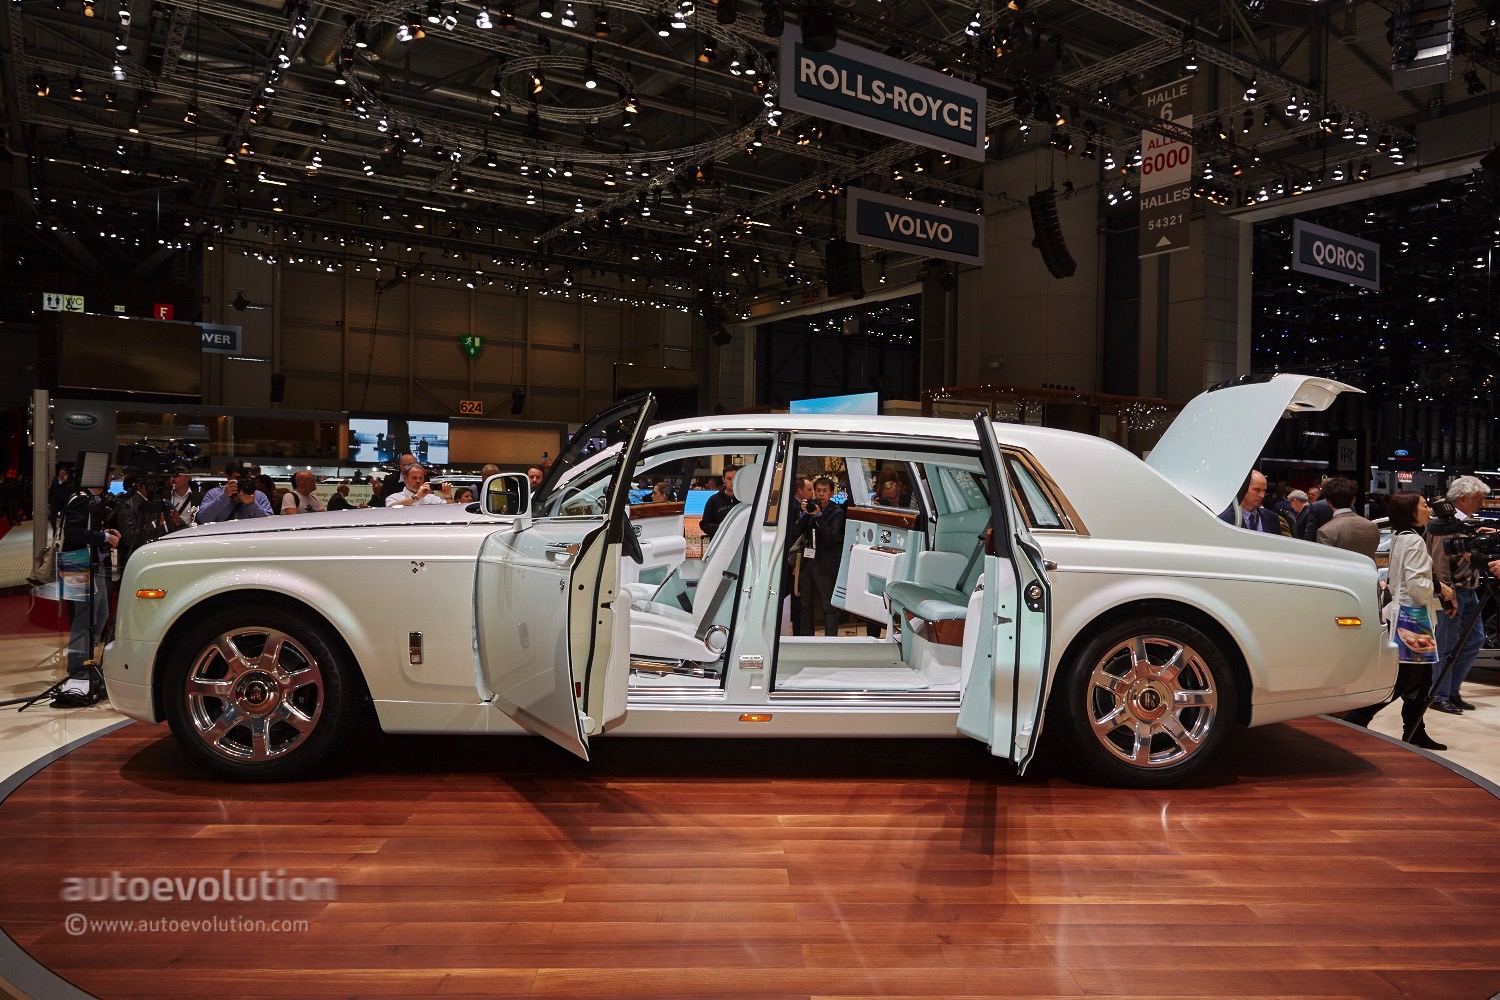 Rolls-Royce Phantom Serenity Wallpapers